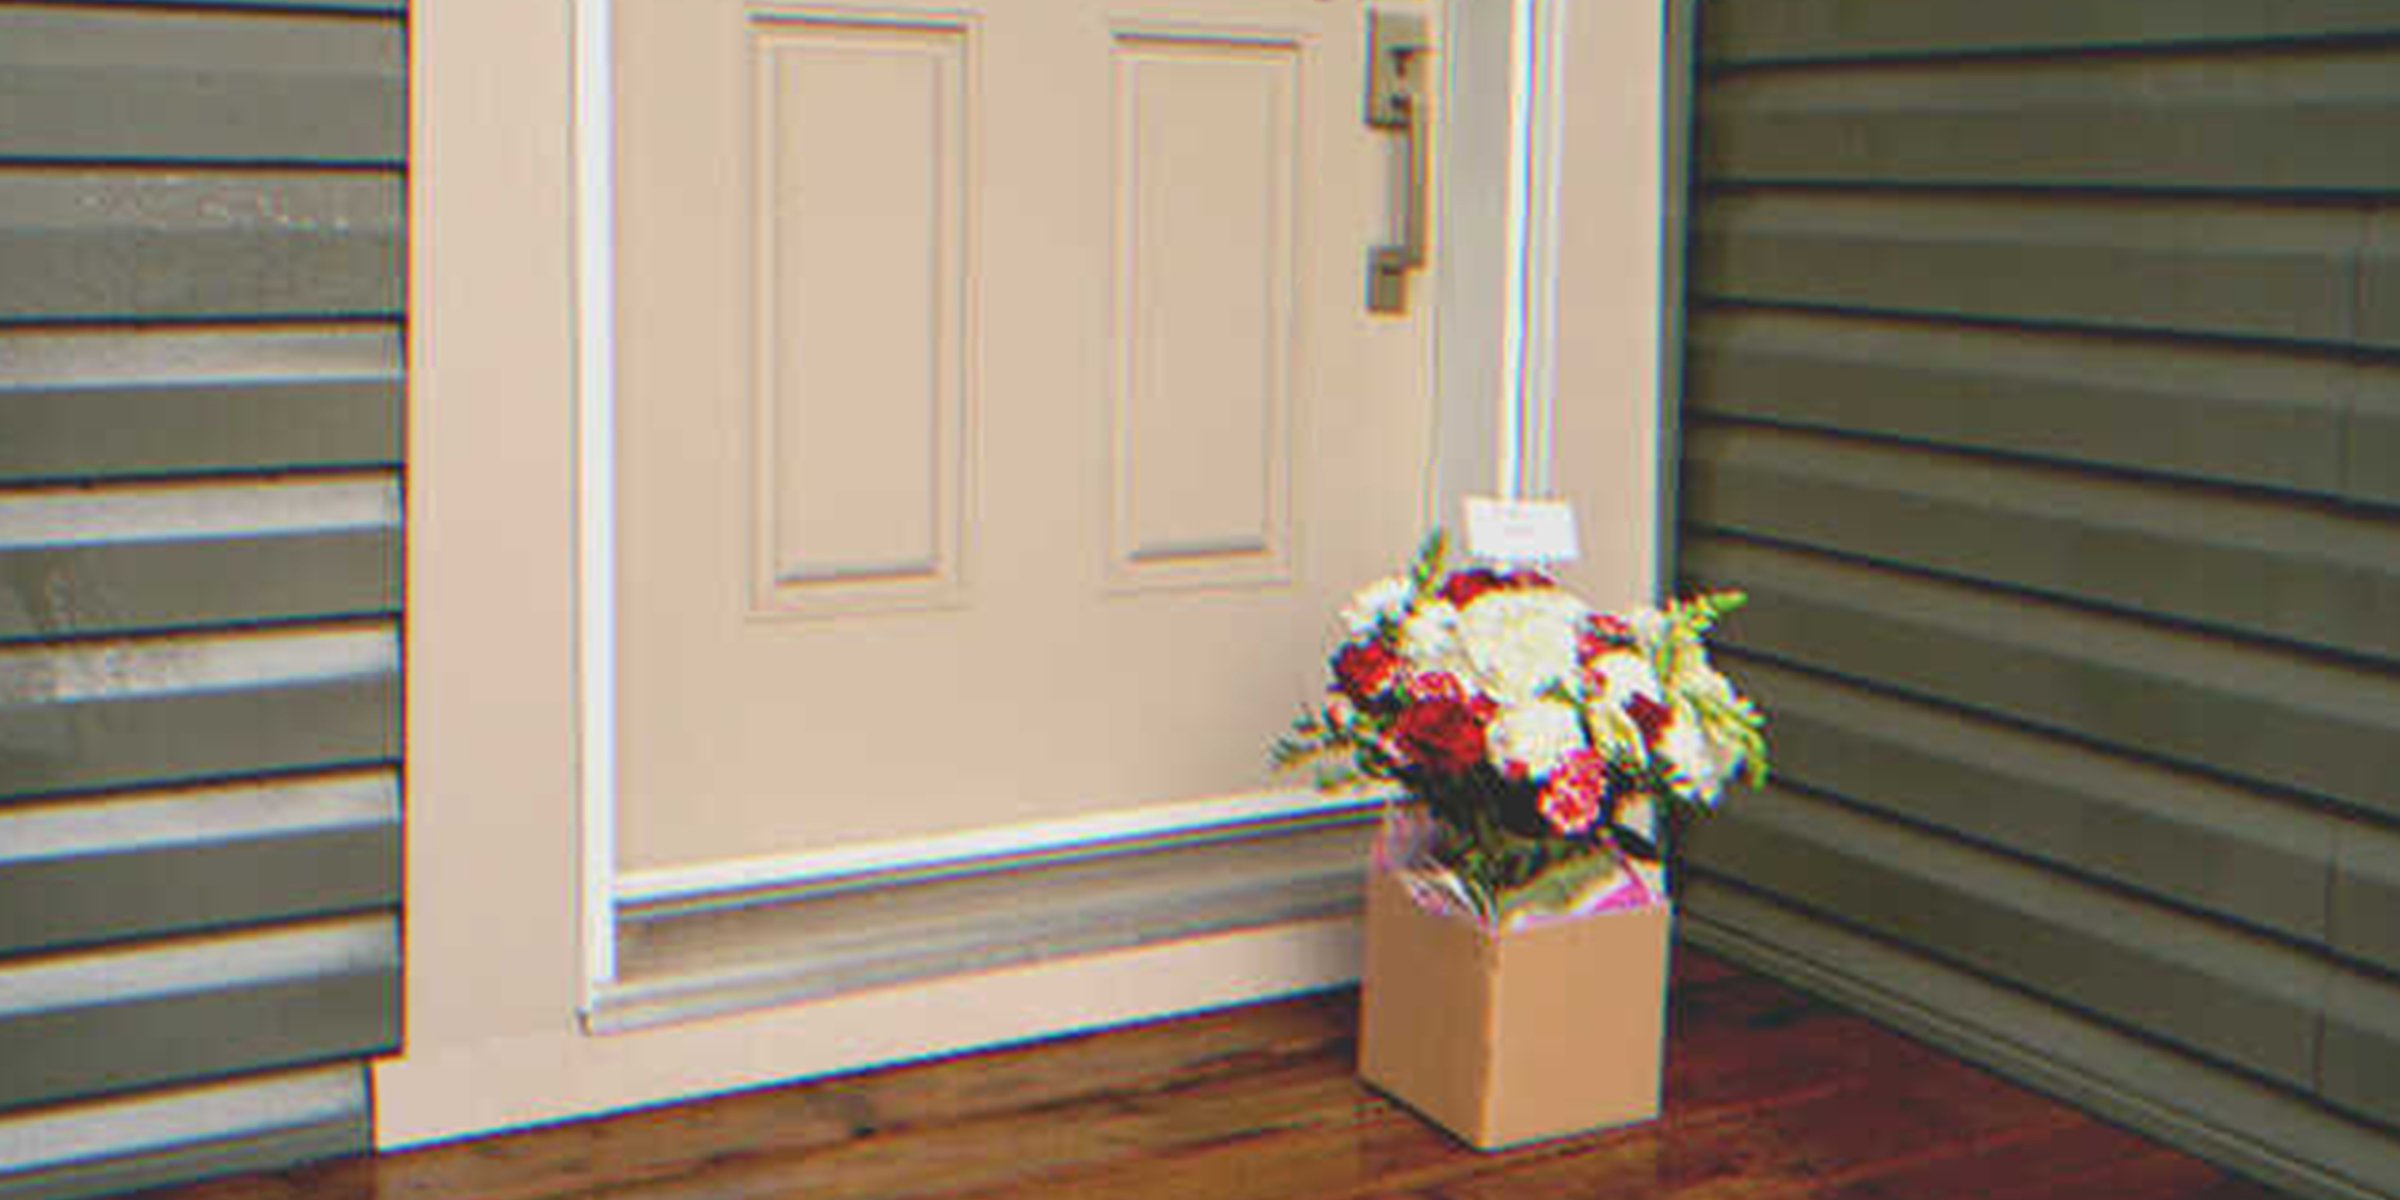 Flores frente a una puerta | Foto: Shutterstock